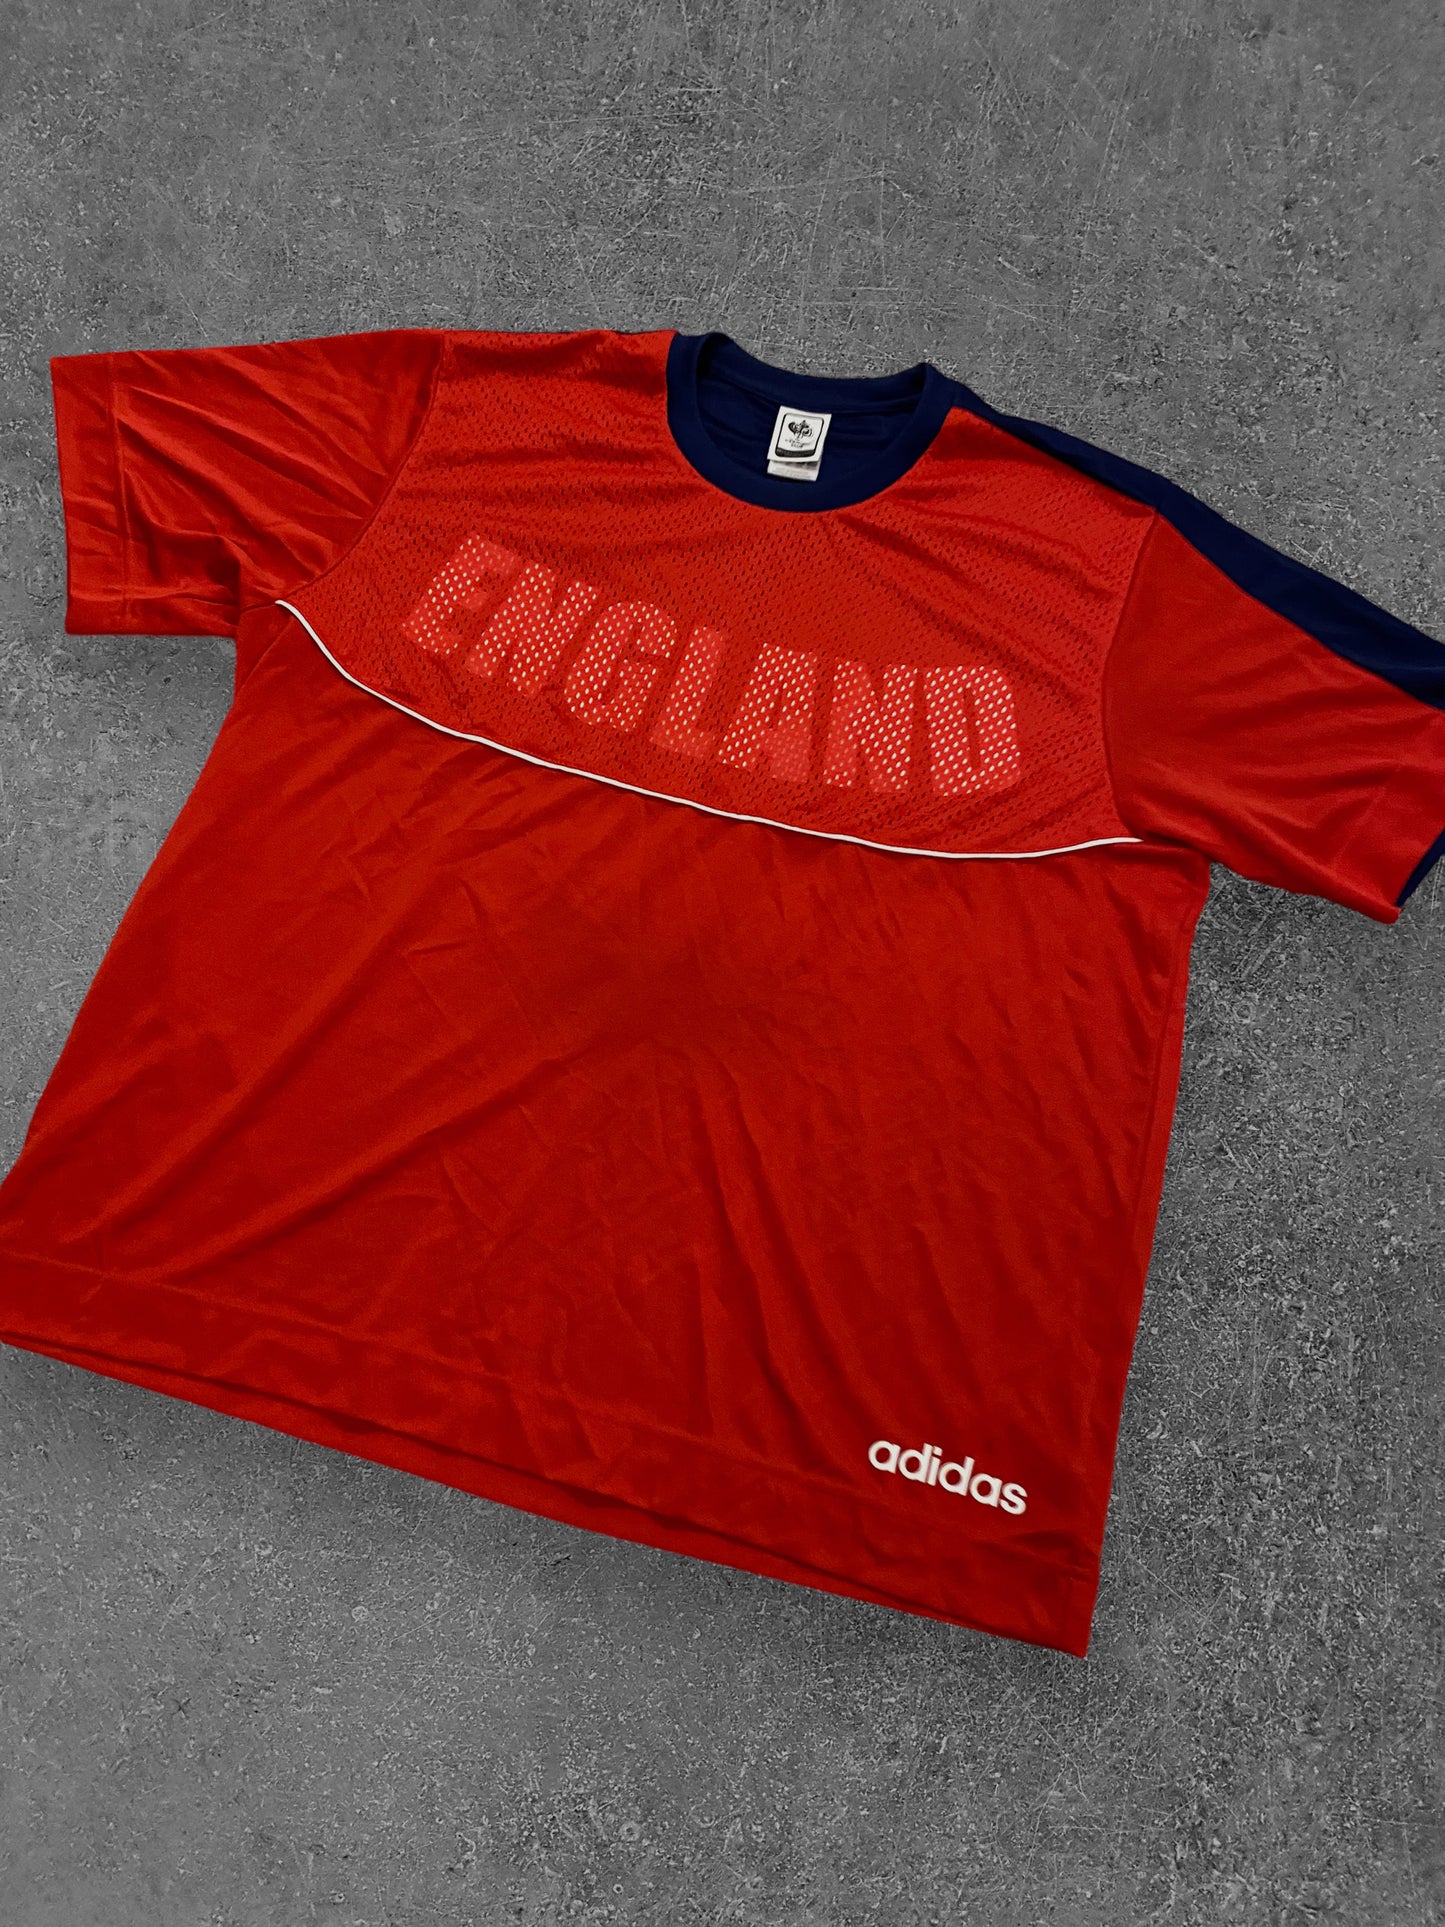 2006 FIFA Englanti Adidas Pelipaita (XL)